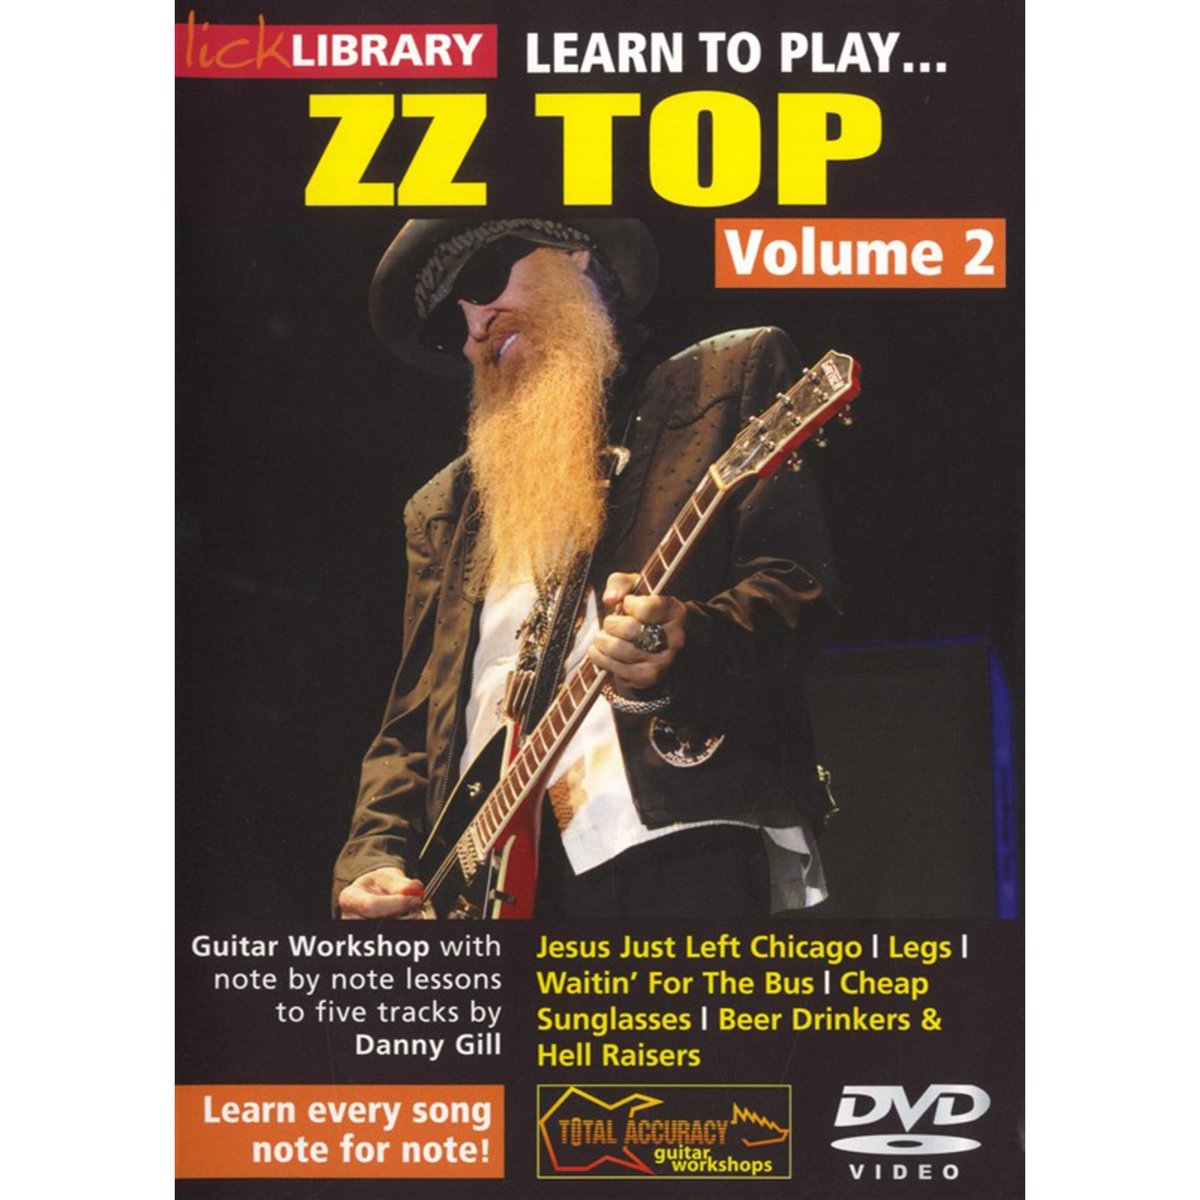 Roadrock International Lick Library - ZZ TOP 2 Learn to play (gitaar), DVD - DVD / CD / Multimedia: Q - Z